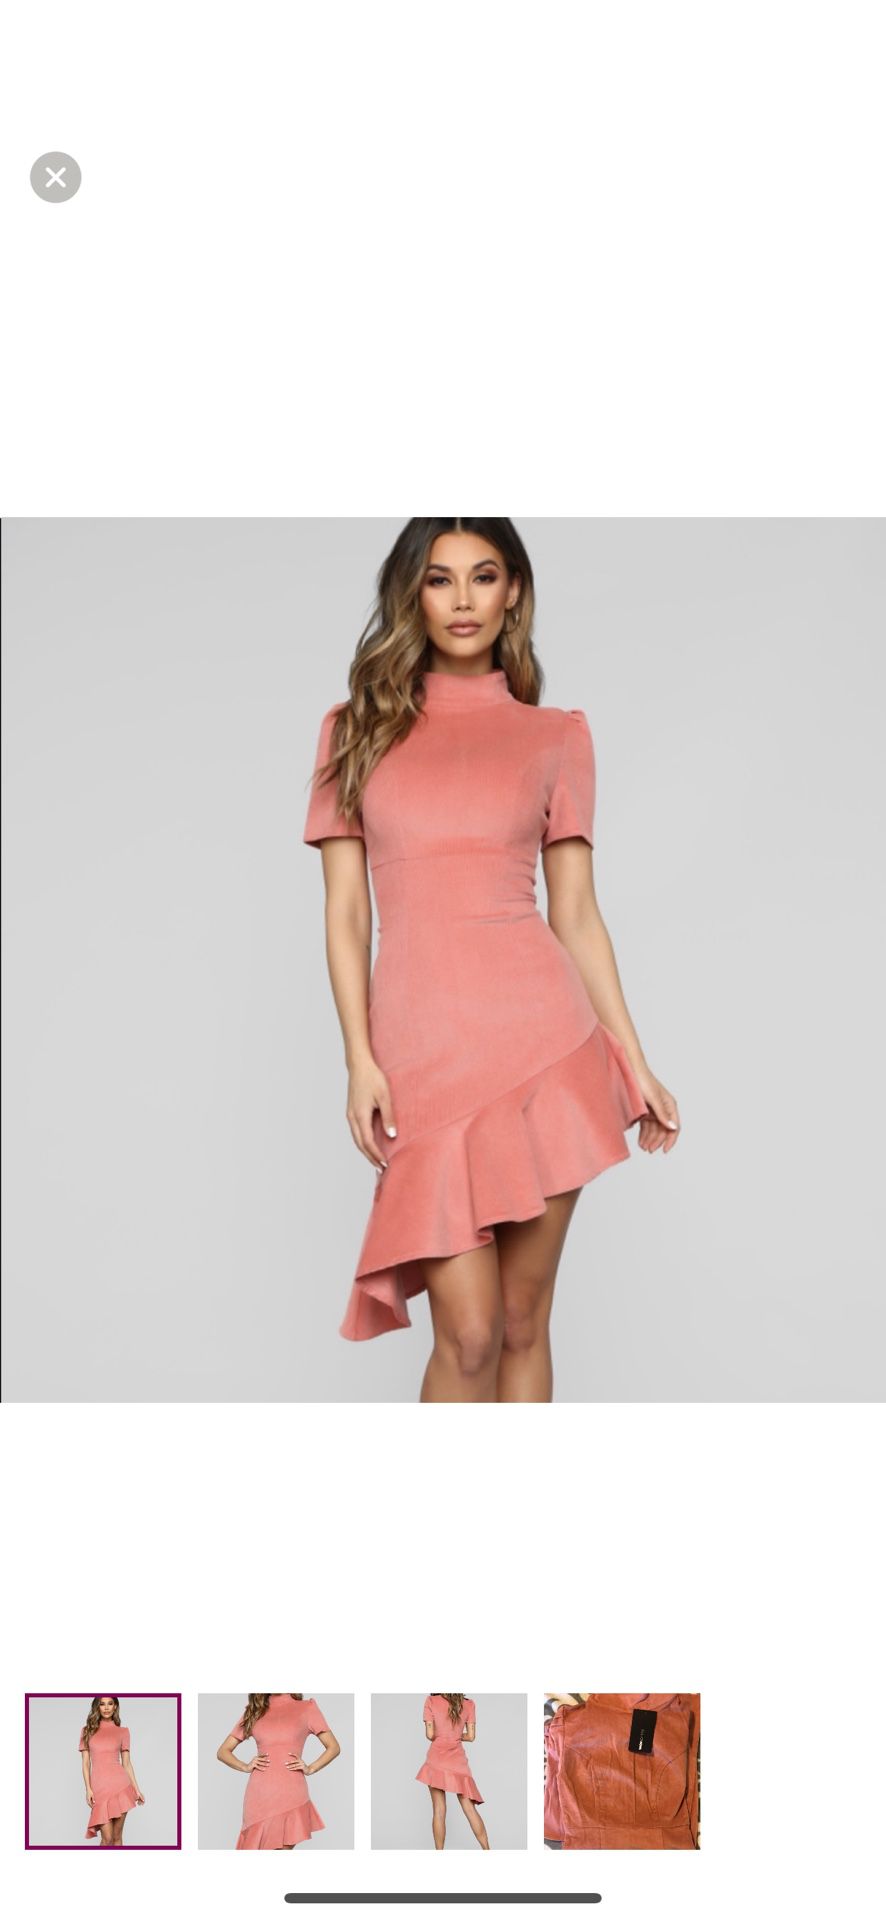 Asymmetrical Pink dress - New! Size small